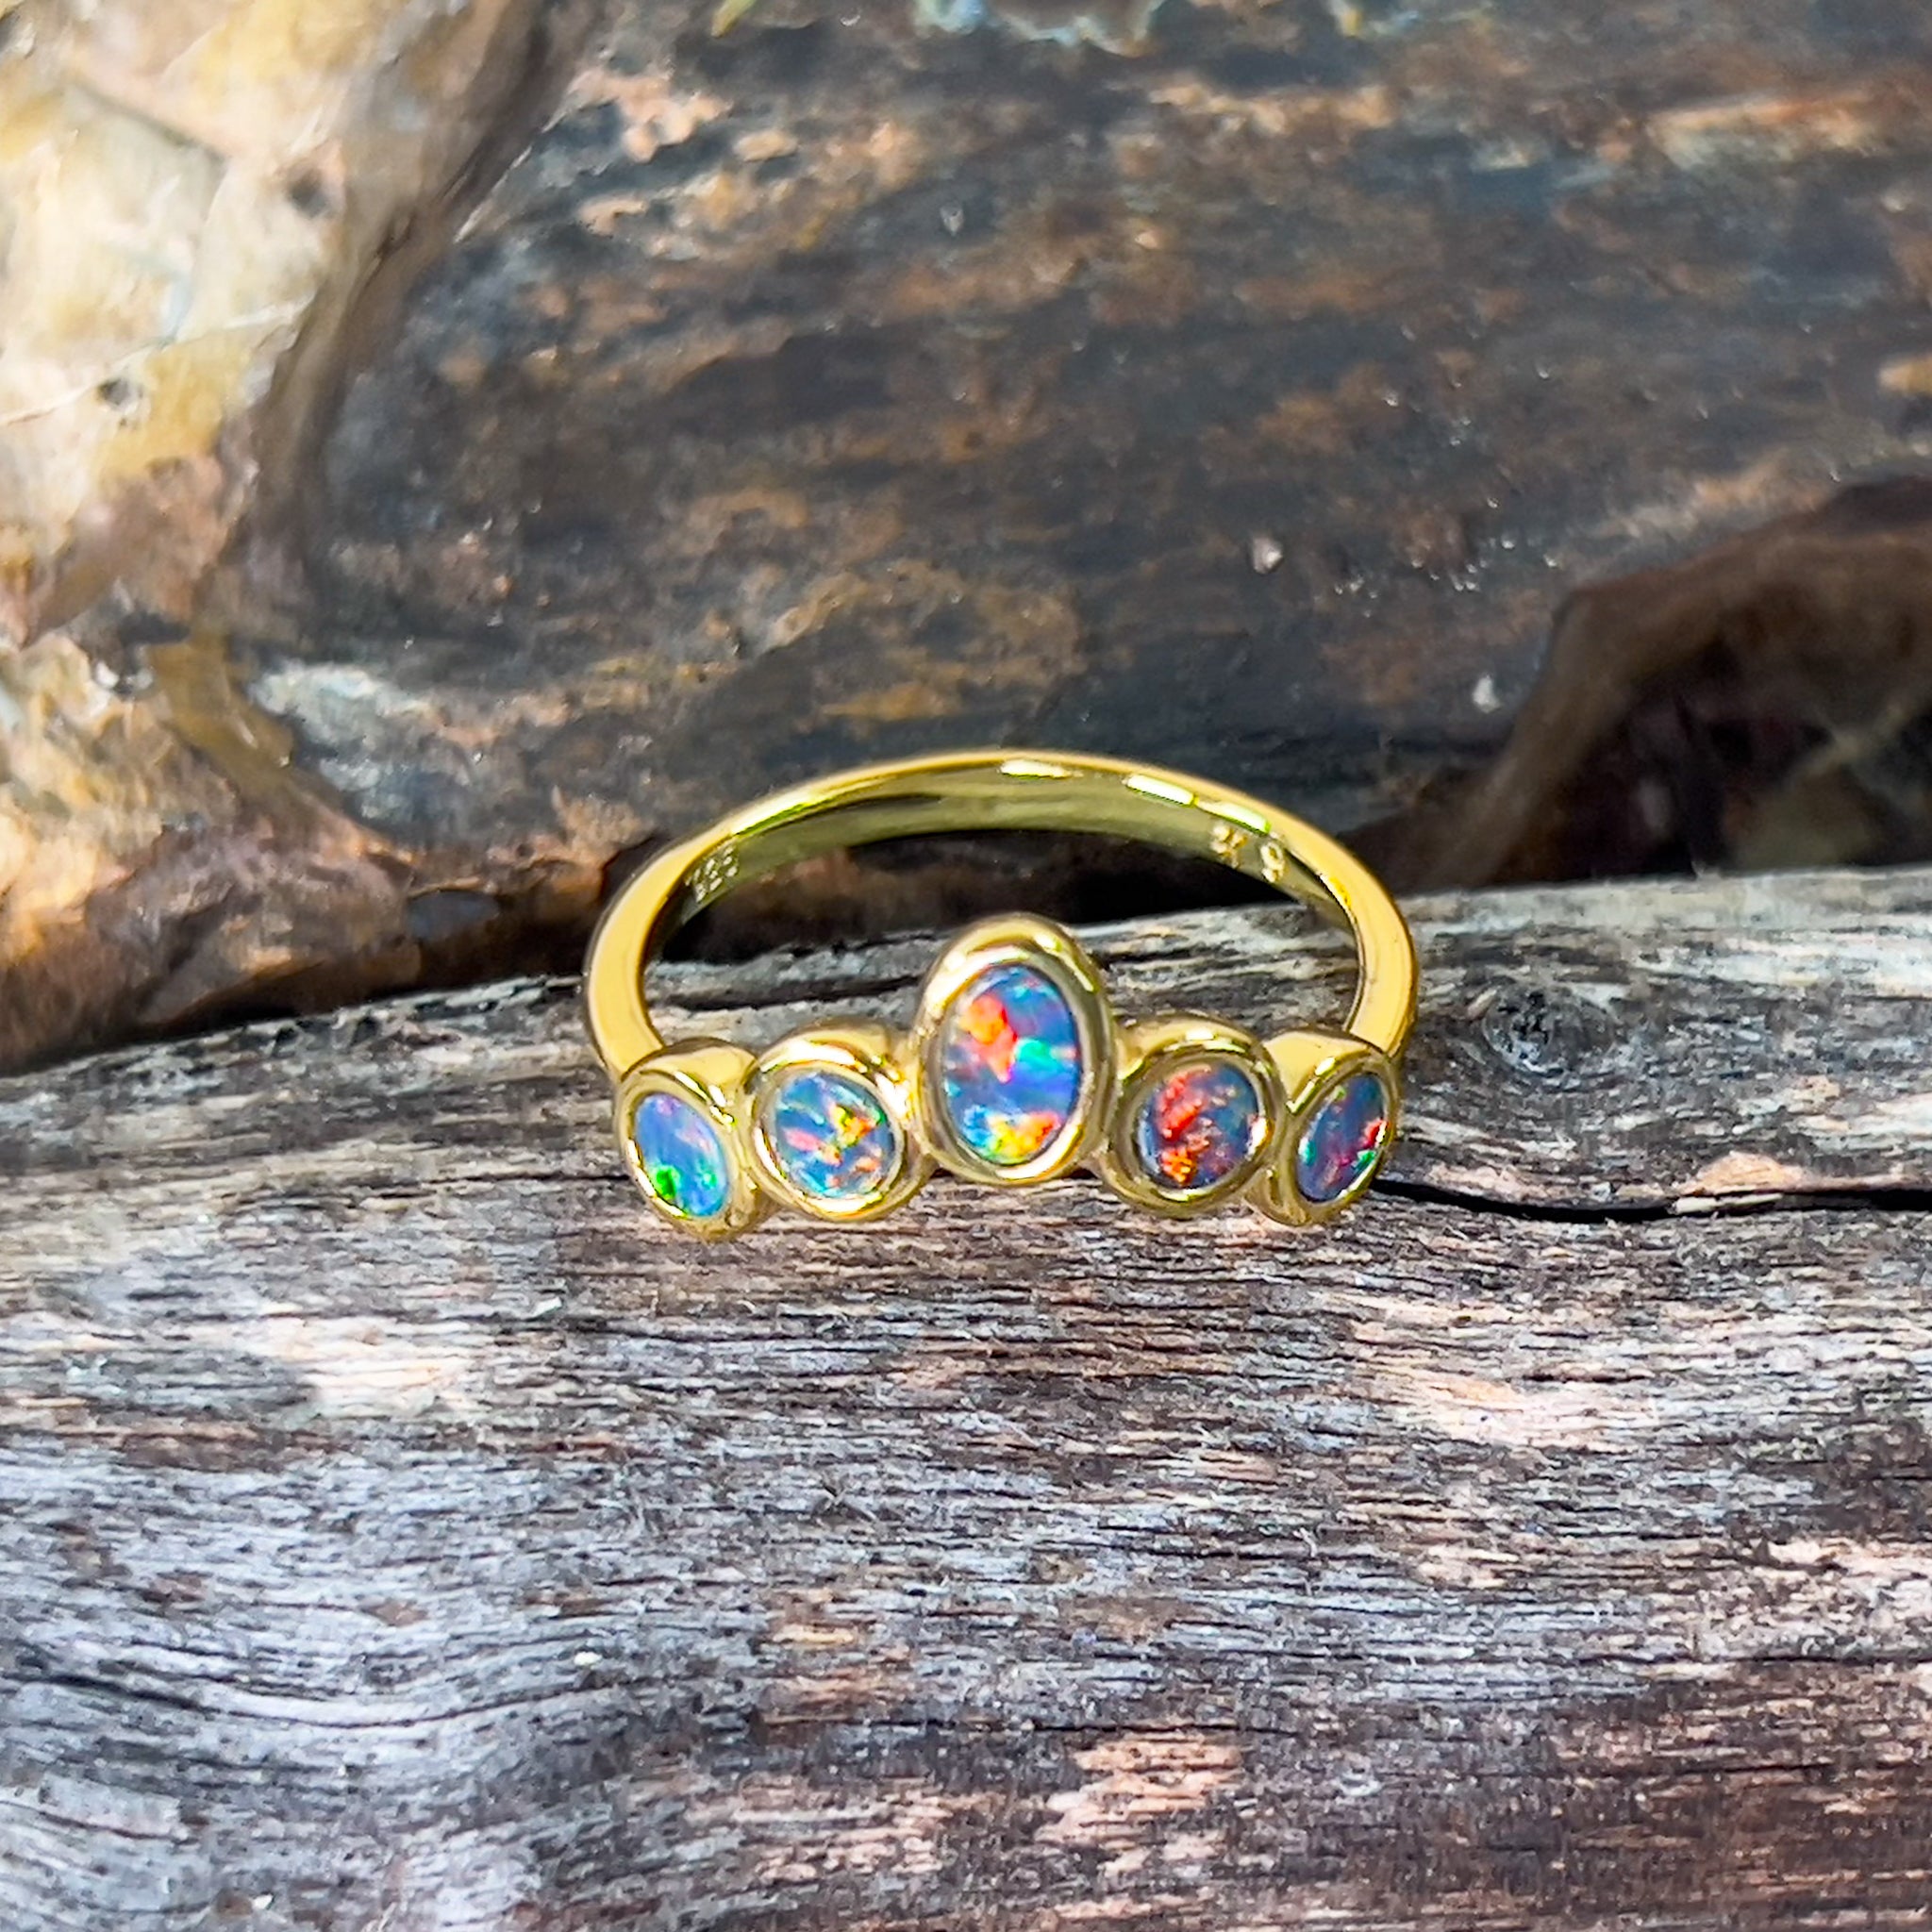 Gold plated sterling silver shaped band five opal doublets - Masterpiece Jewellery Opal & Gems Sydney Australia | Online Shop